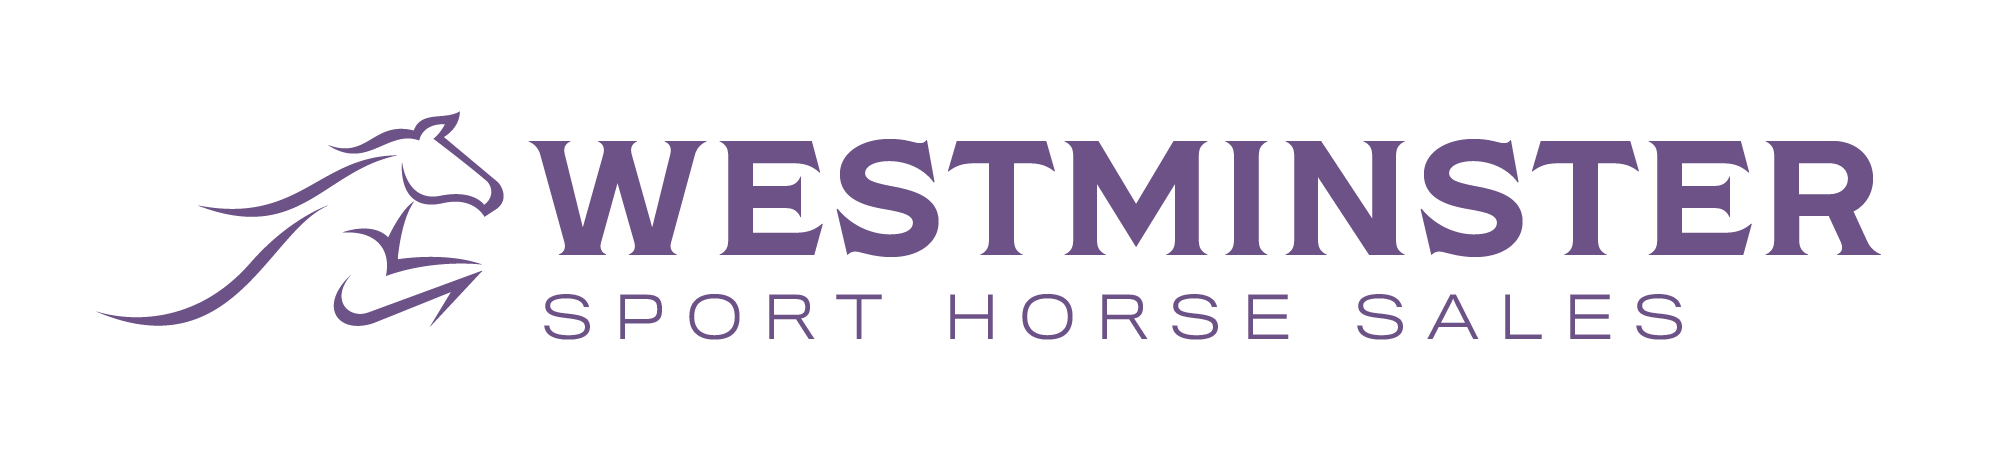 Westminster Sport Horse Sales